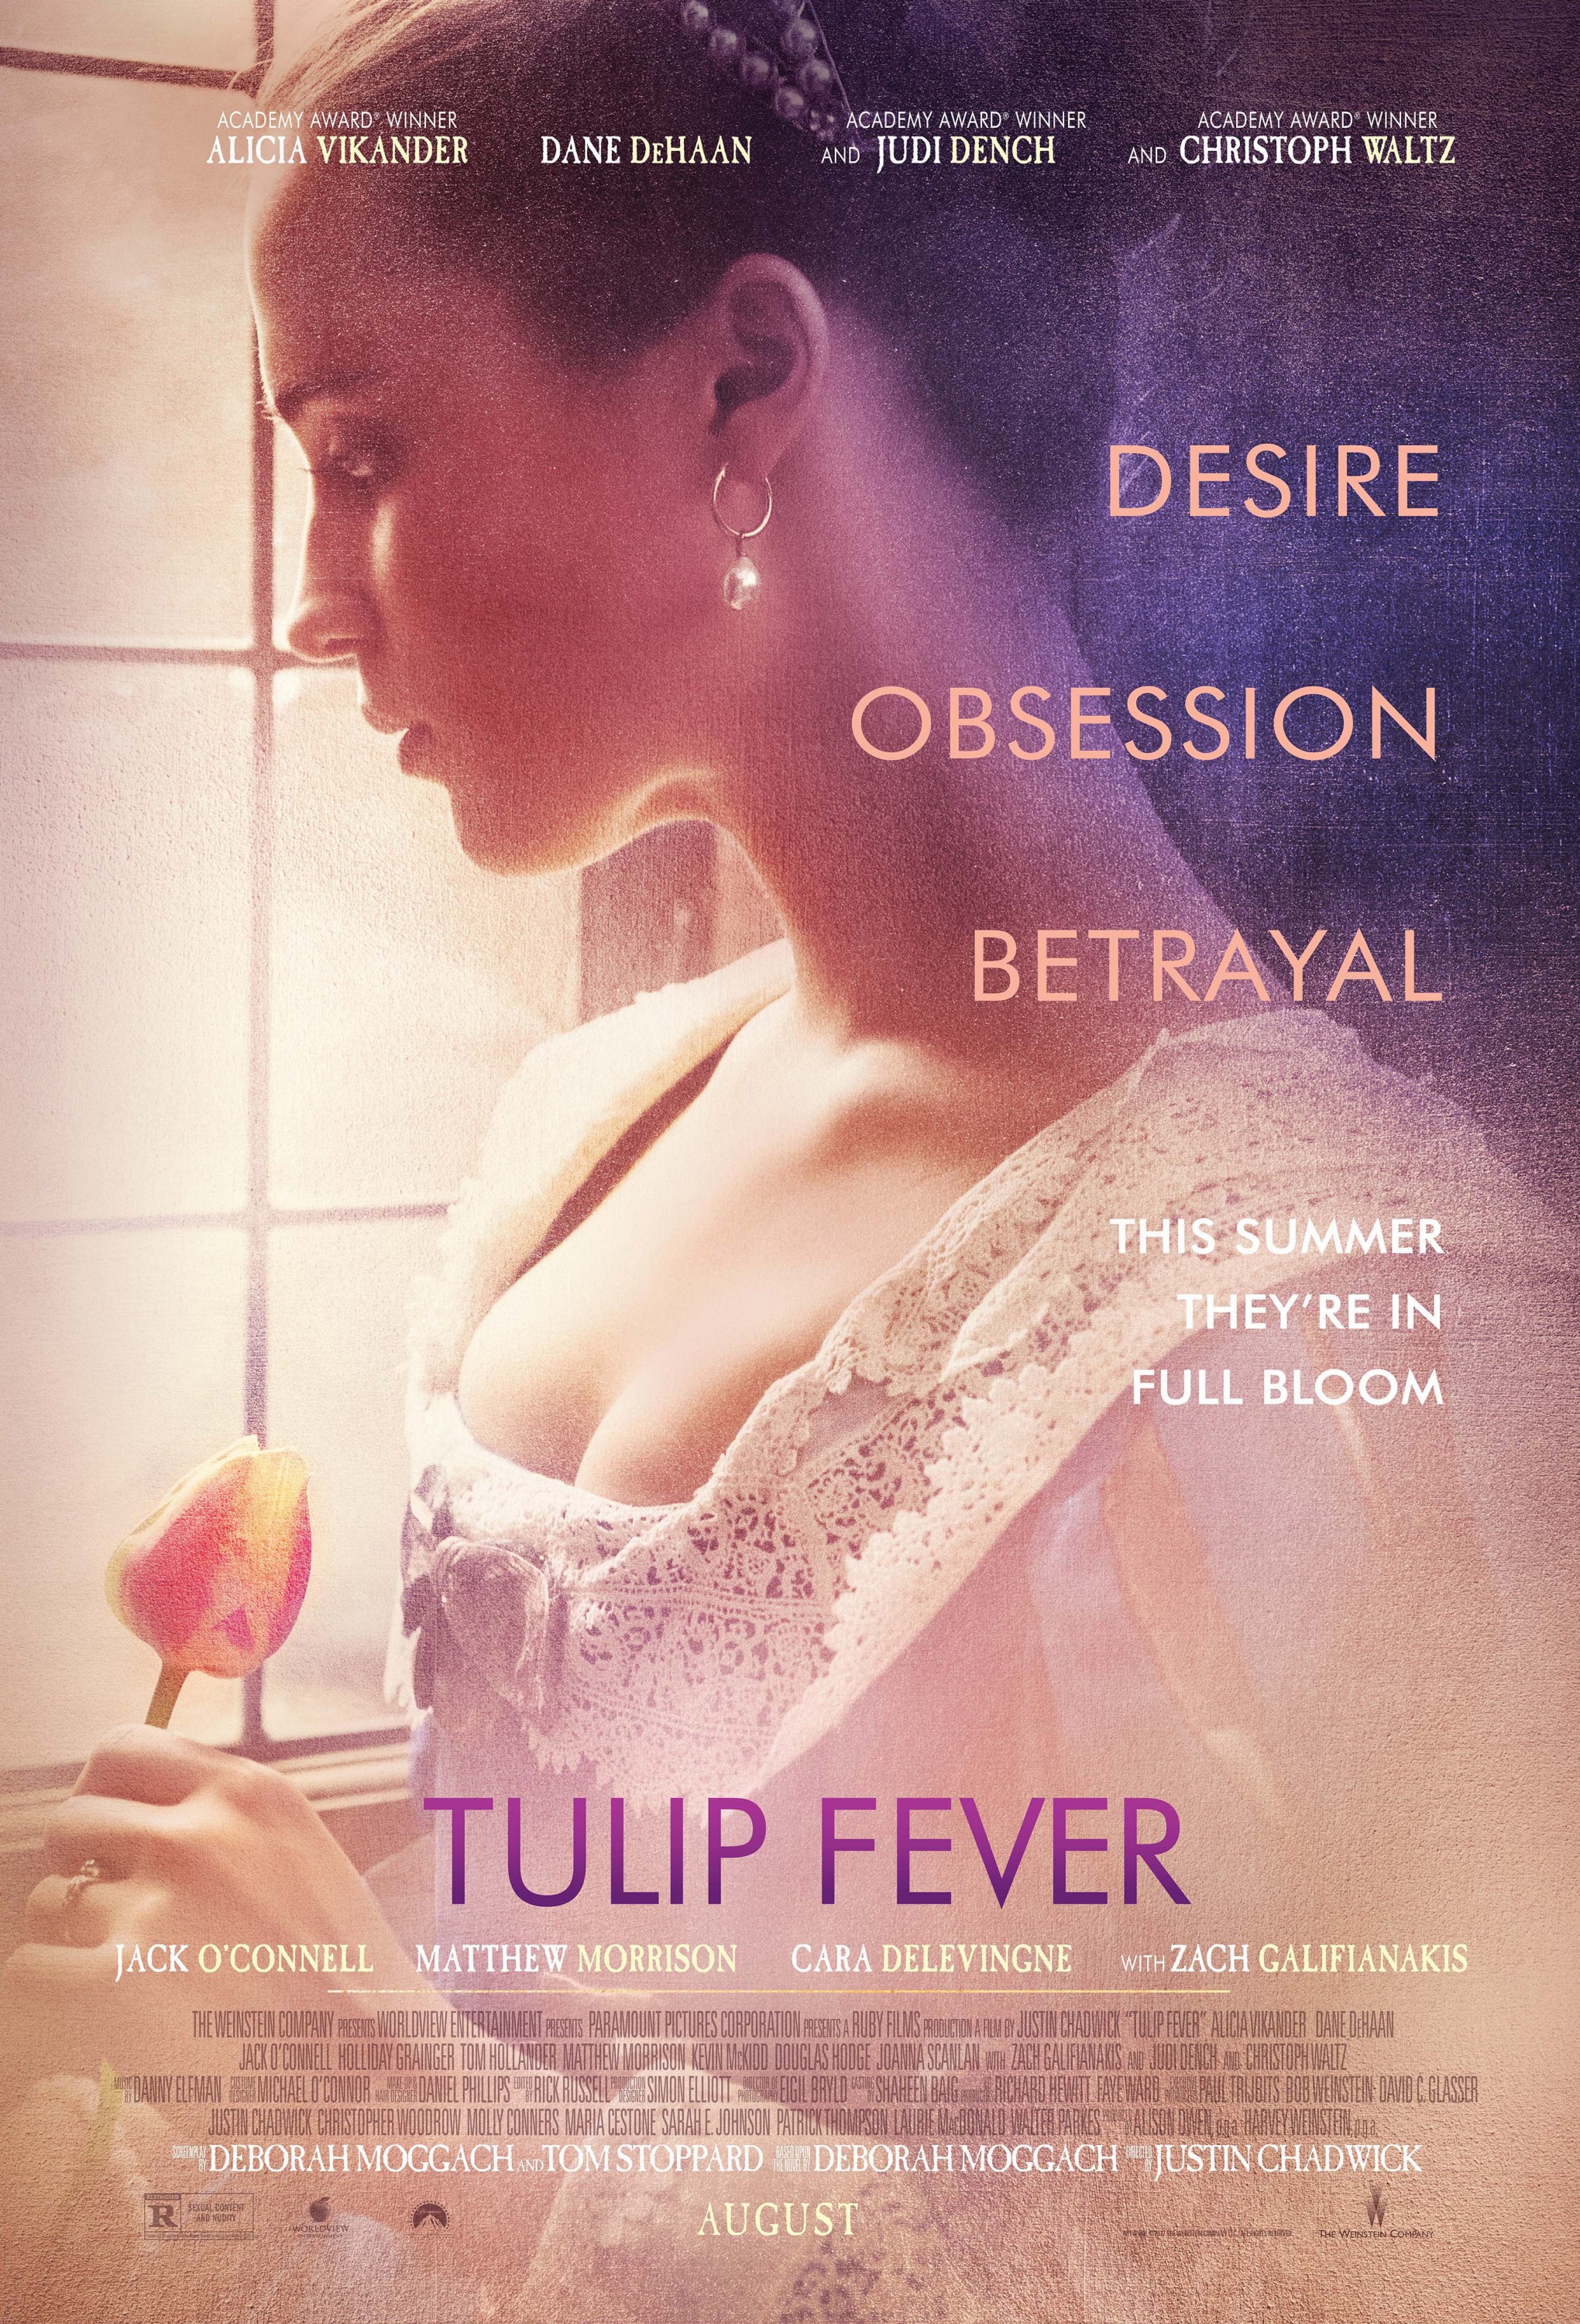 Alicia Vikander In Tulip Fever Wallpapers